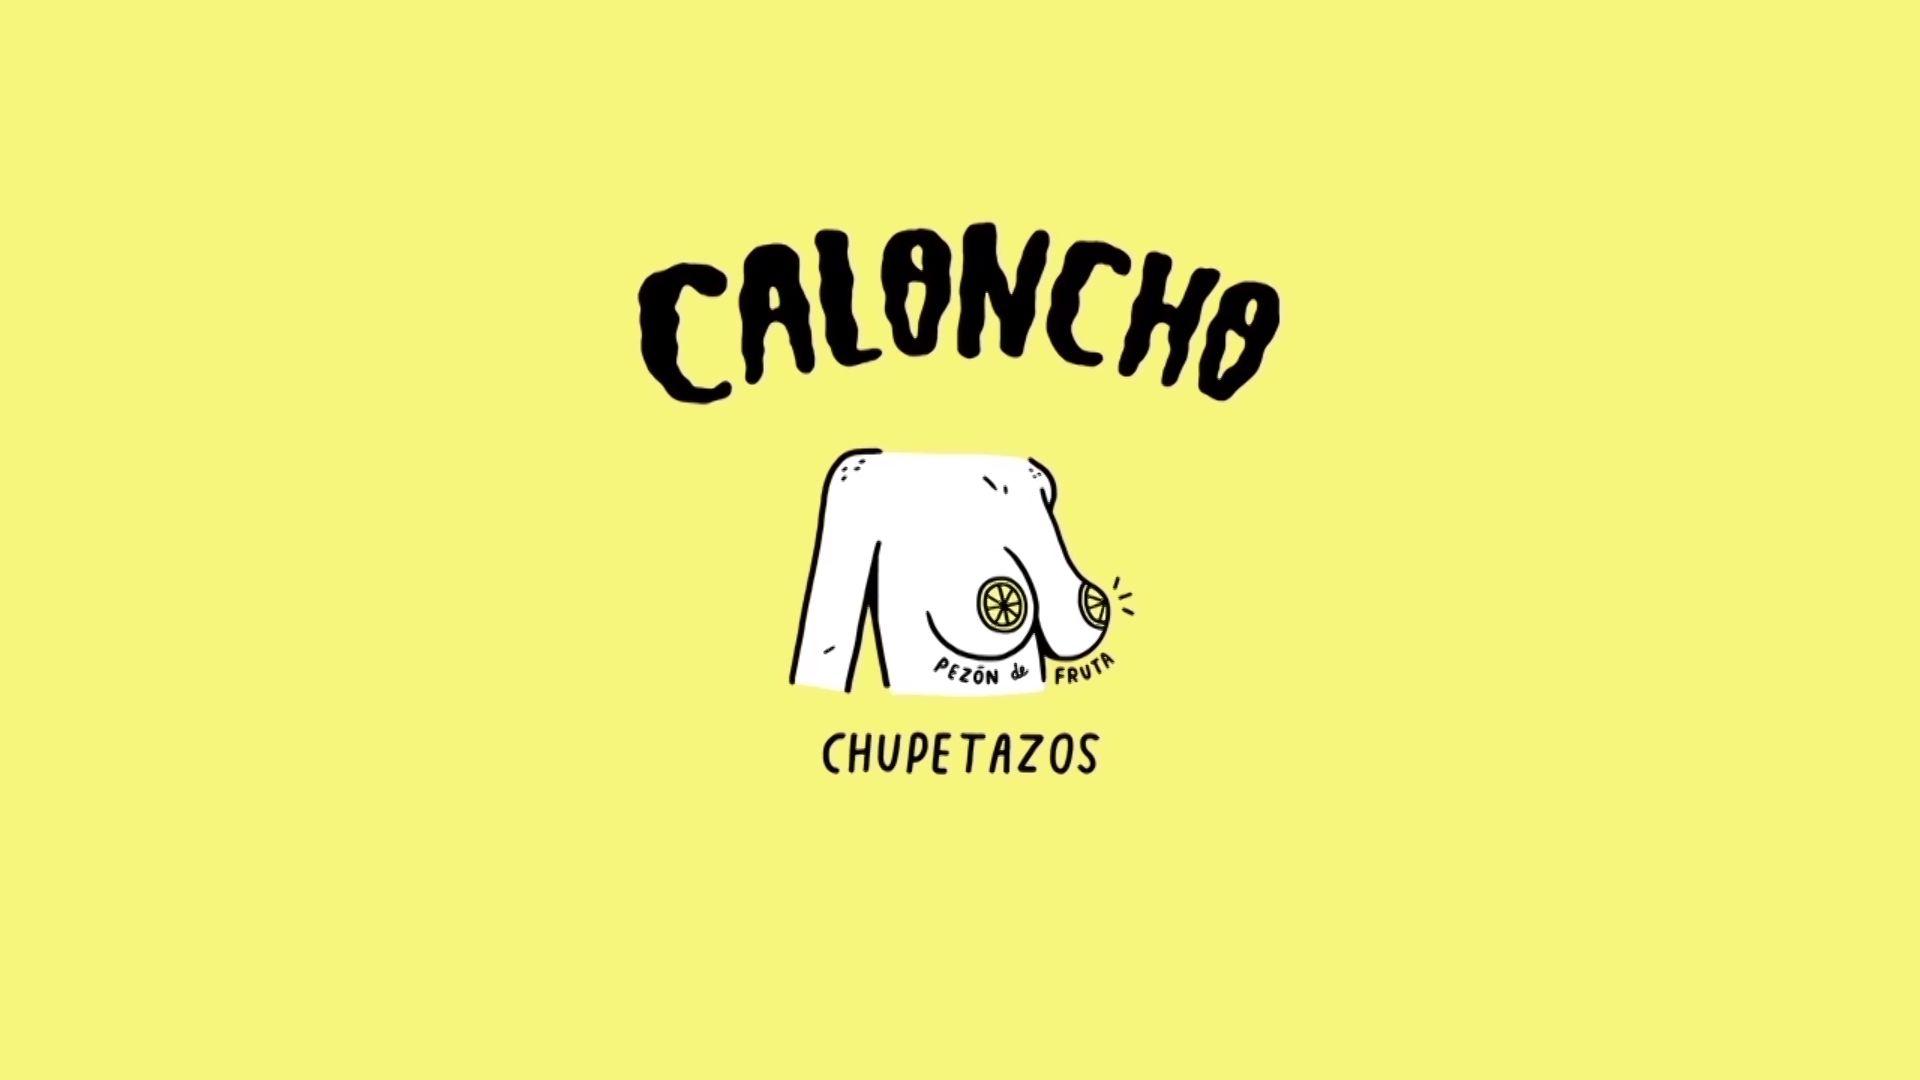 Caloncho - Chupetazos (Lyric Video)